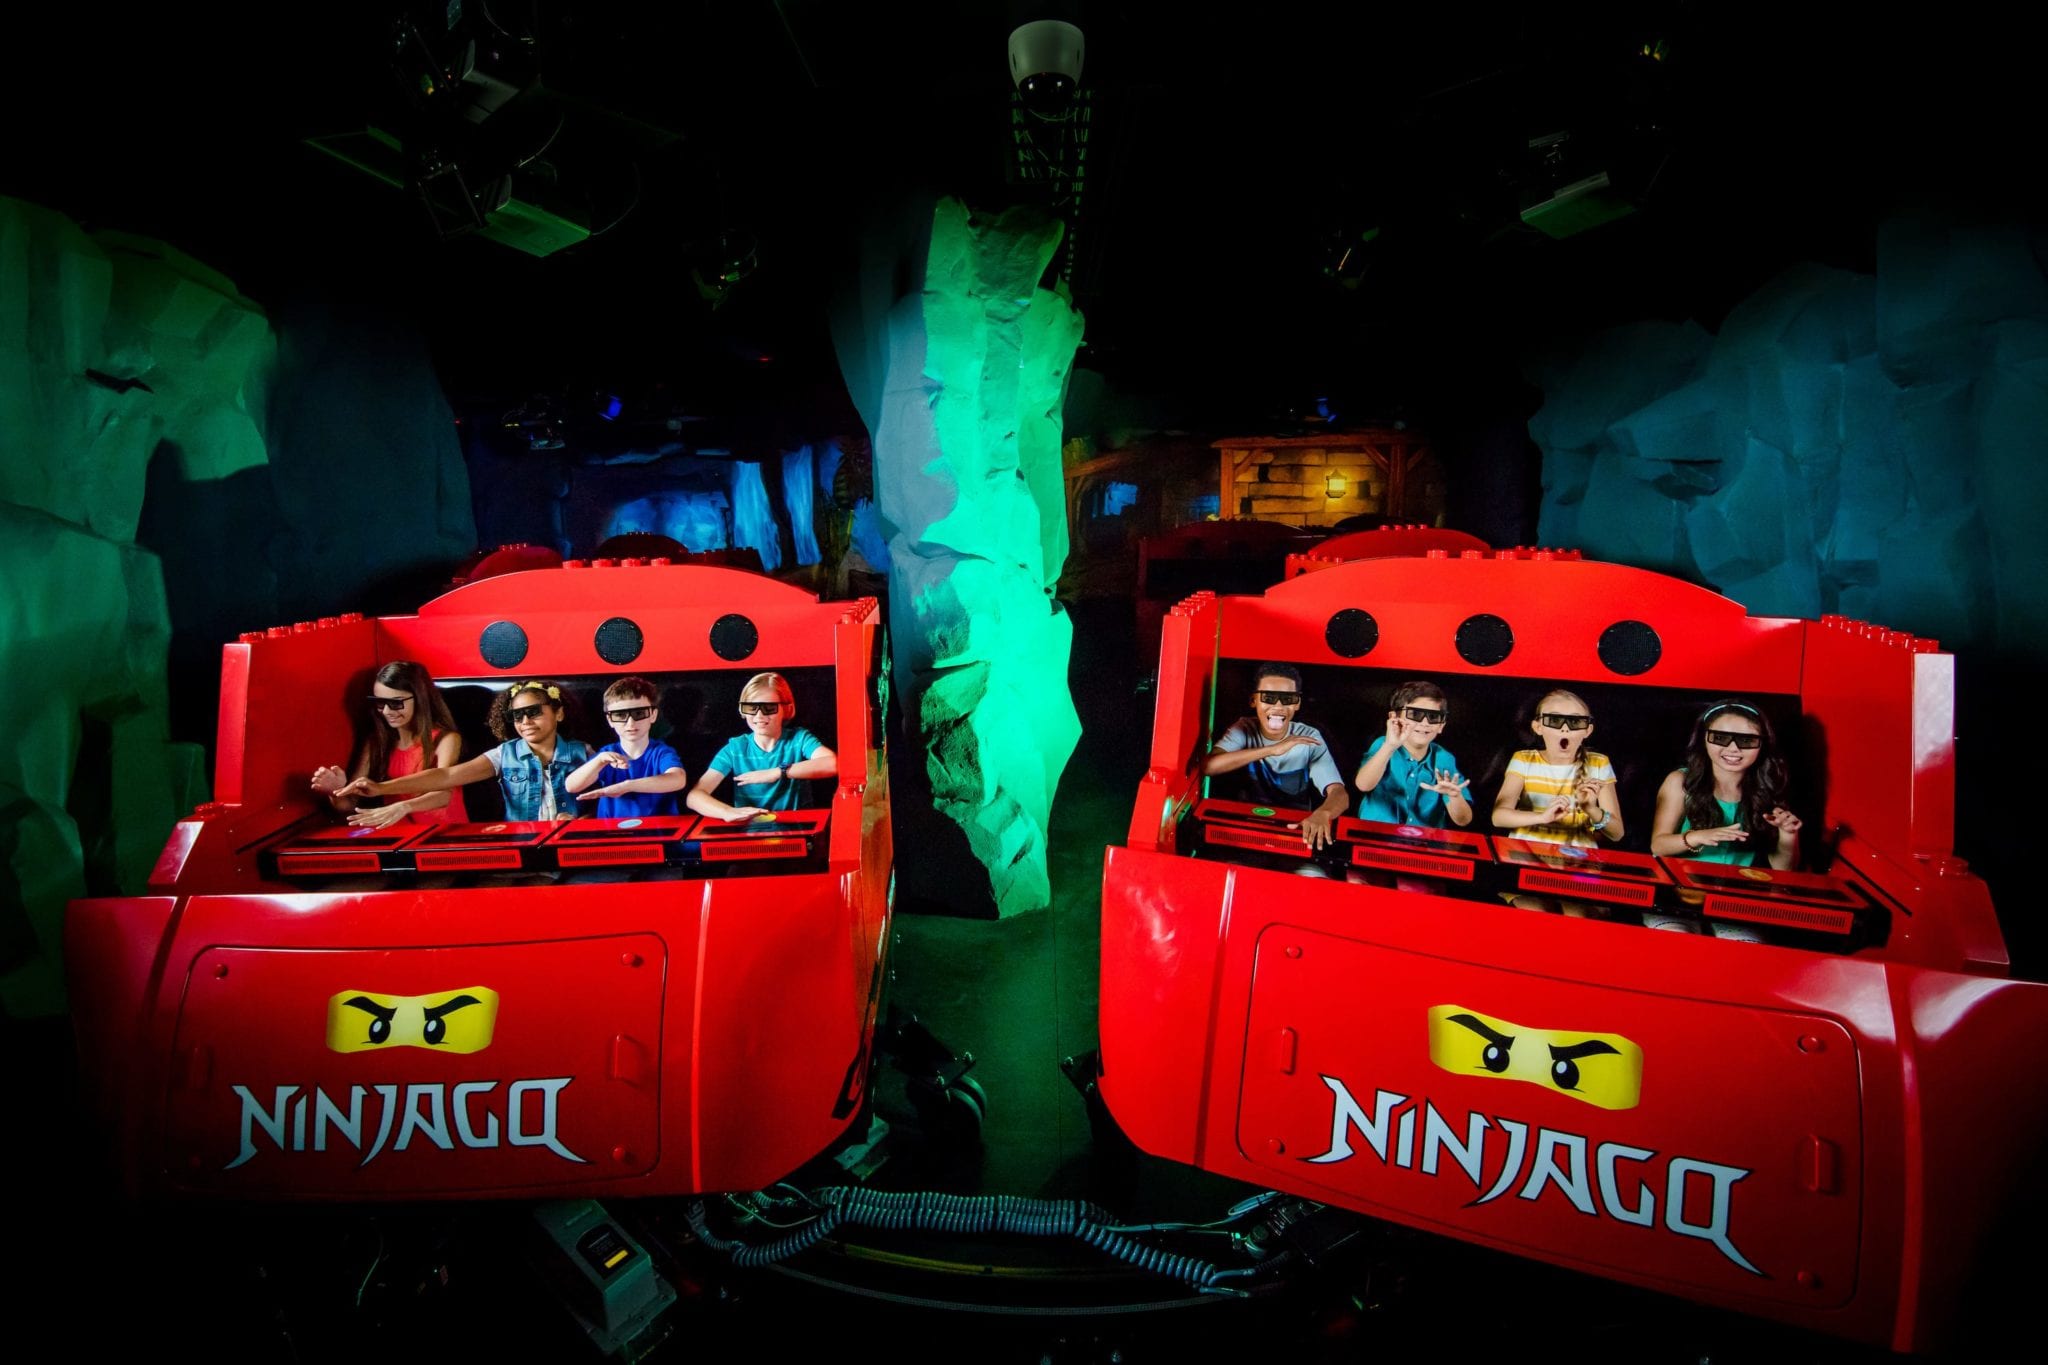 Lego Ninjago World officially opens at Legoland Florida Resort